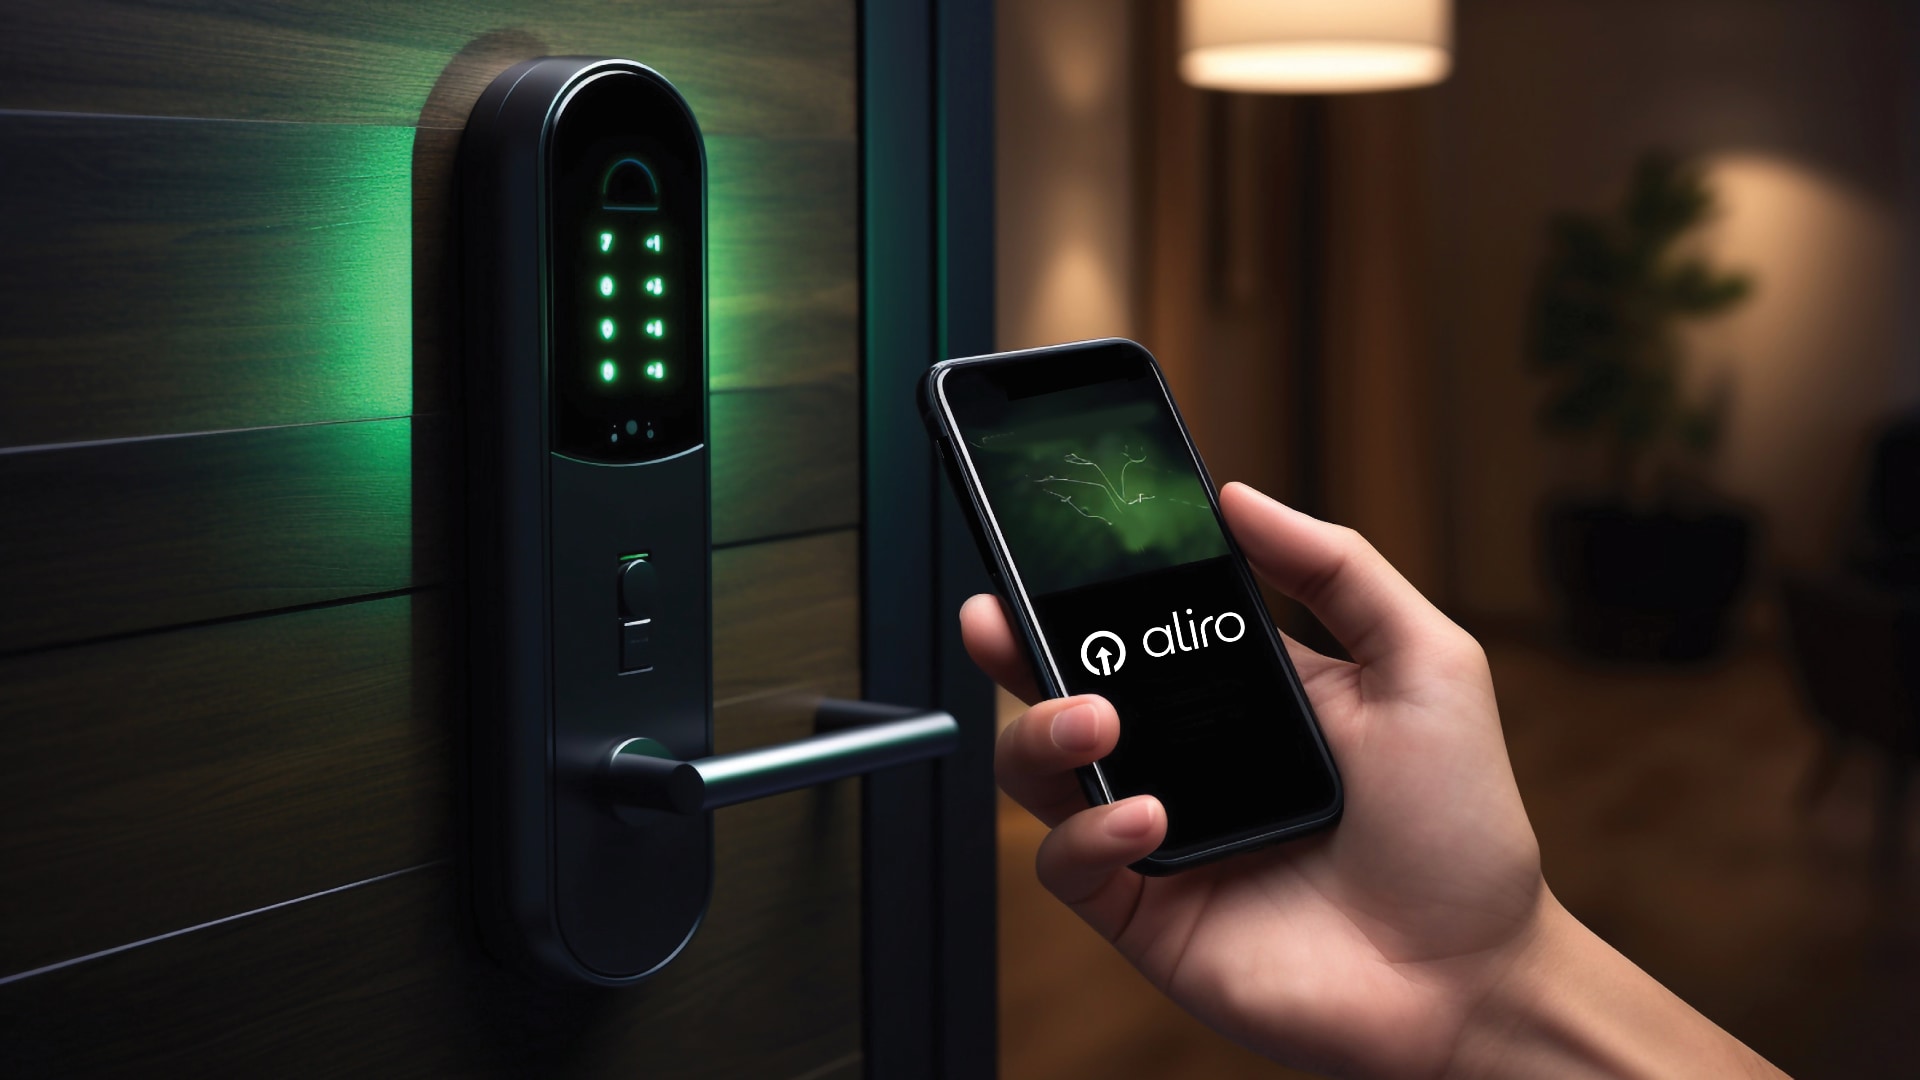 Smartphone with Aliro logo on the display, held near a smart door lock